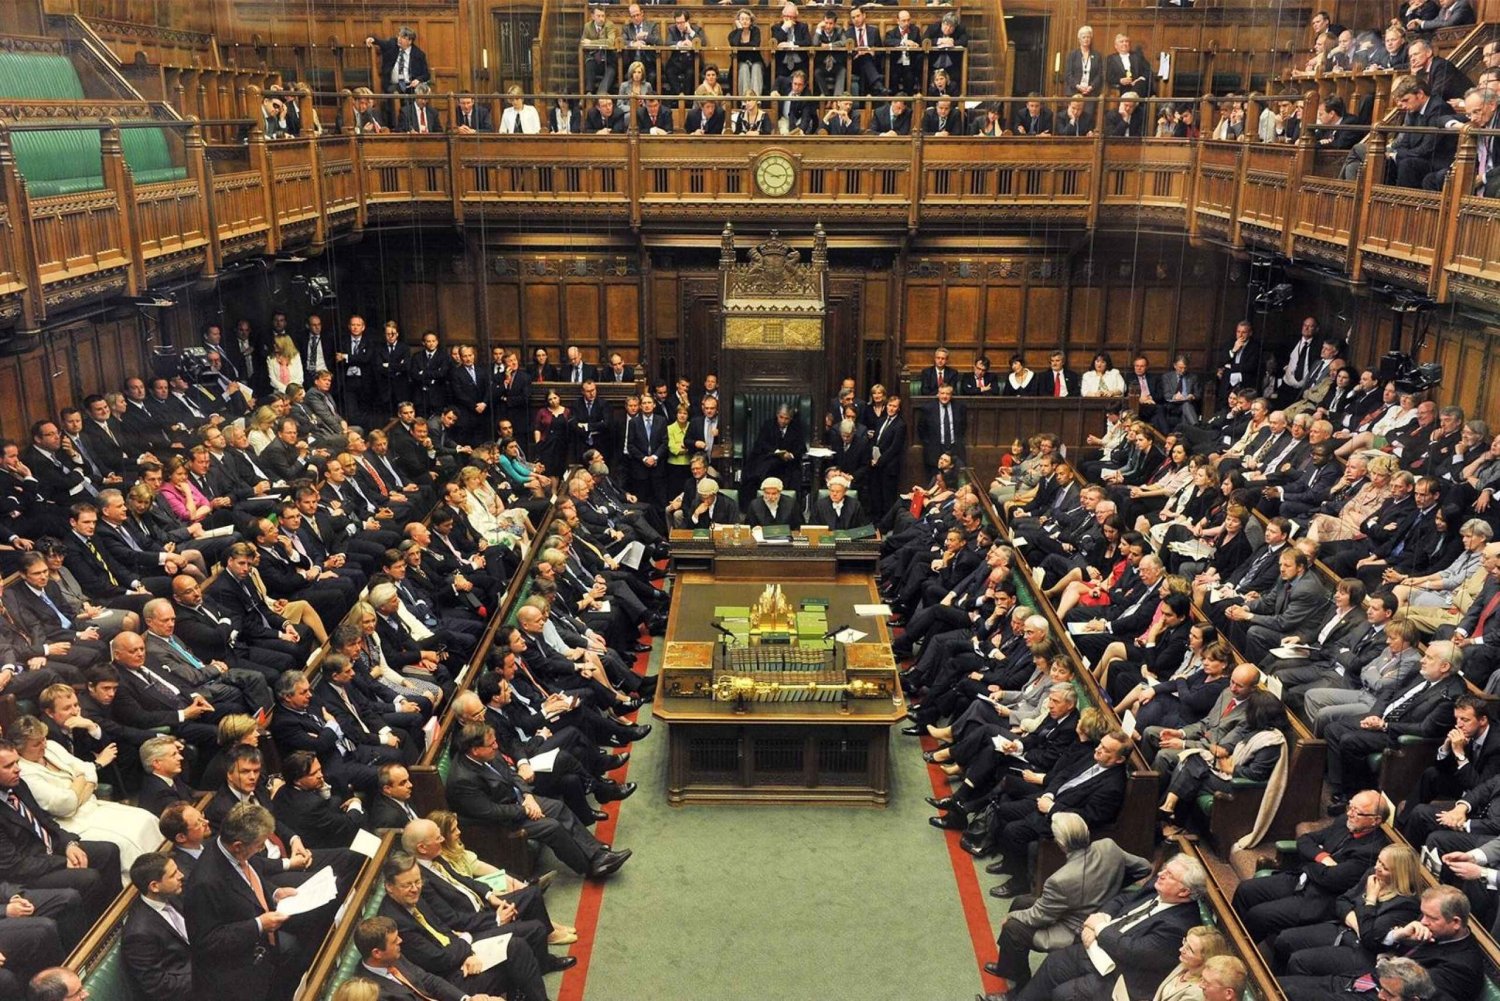 Besøk The Houses of Parliament og 3 timers spasertur i Westminster